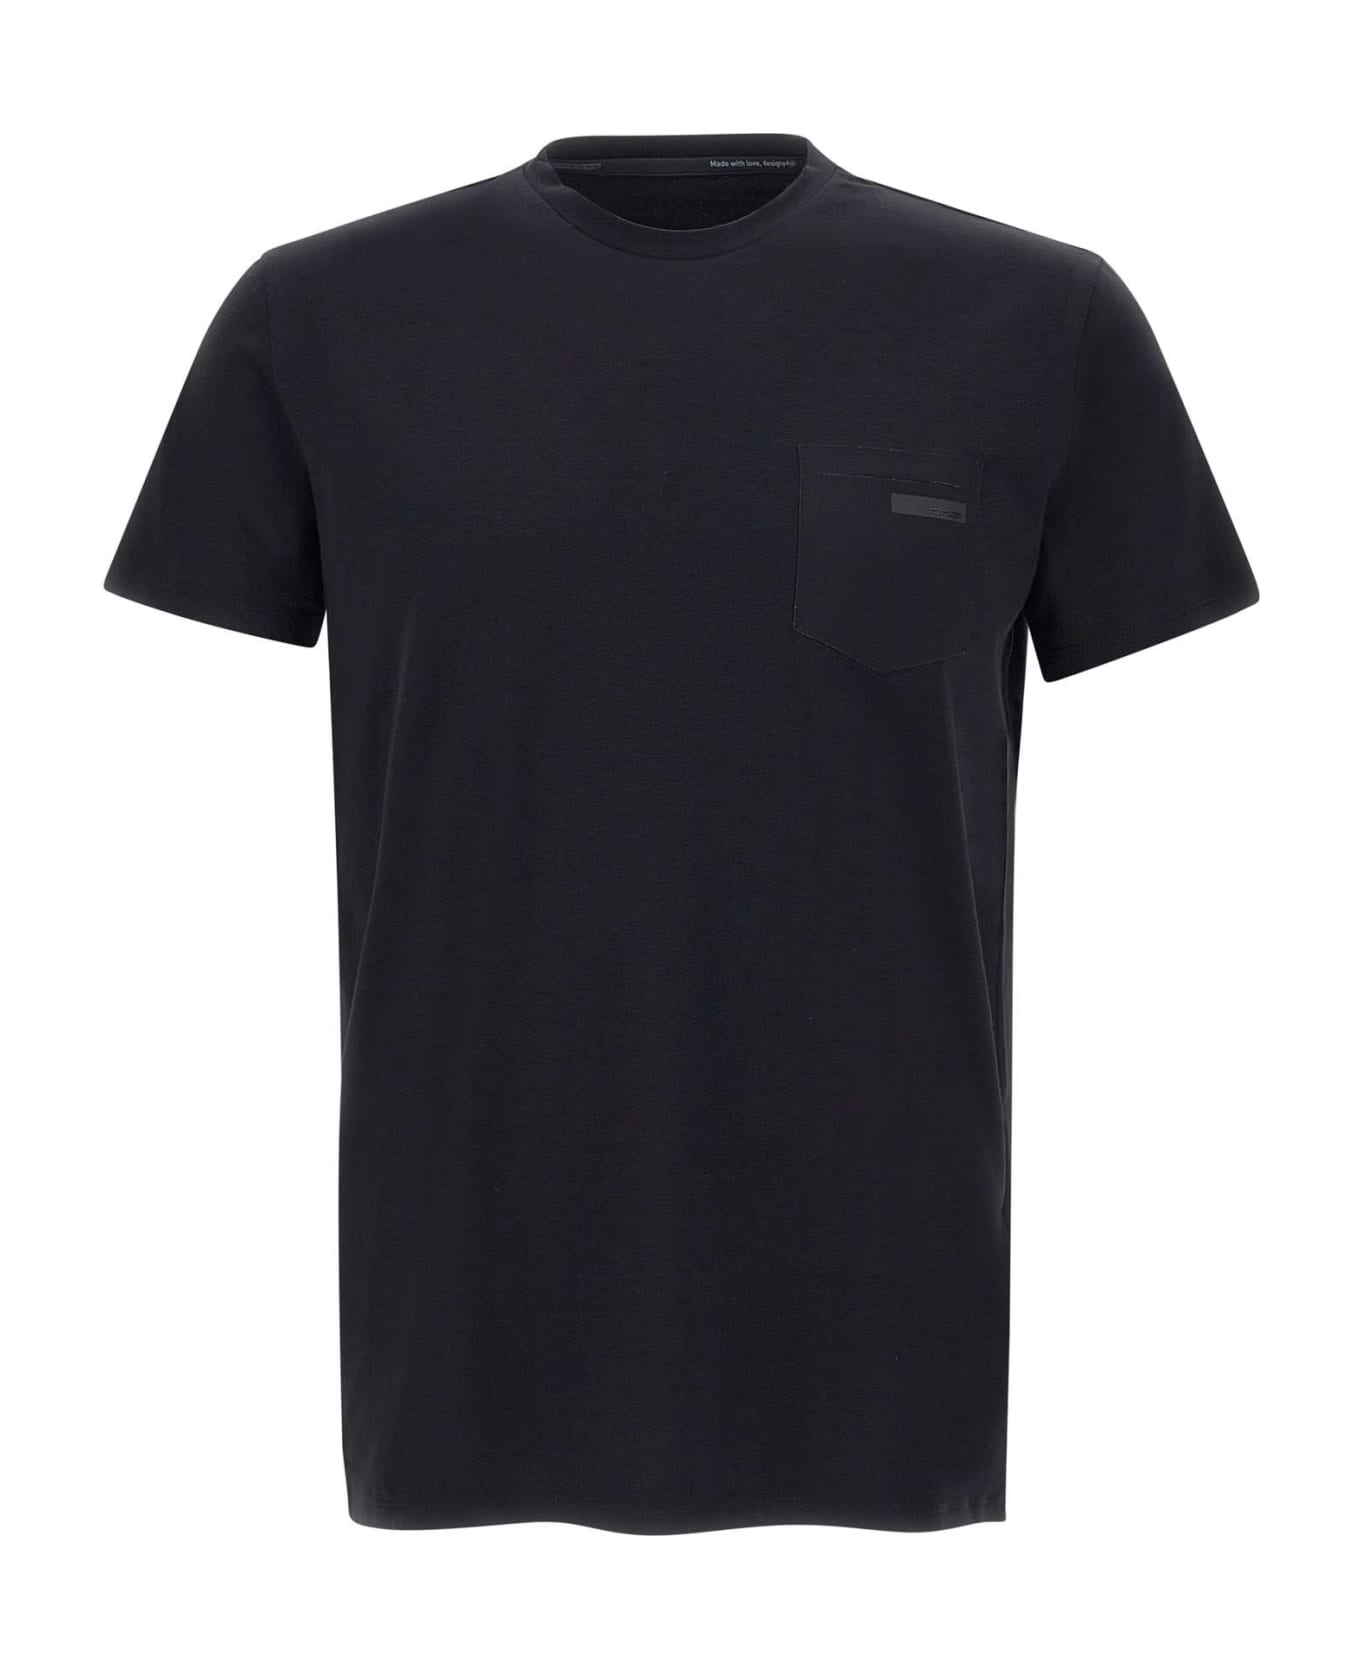 RRD - Roberto Ricci Design 'revo Shirty' T-shirt - Black